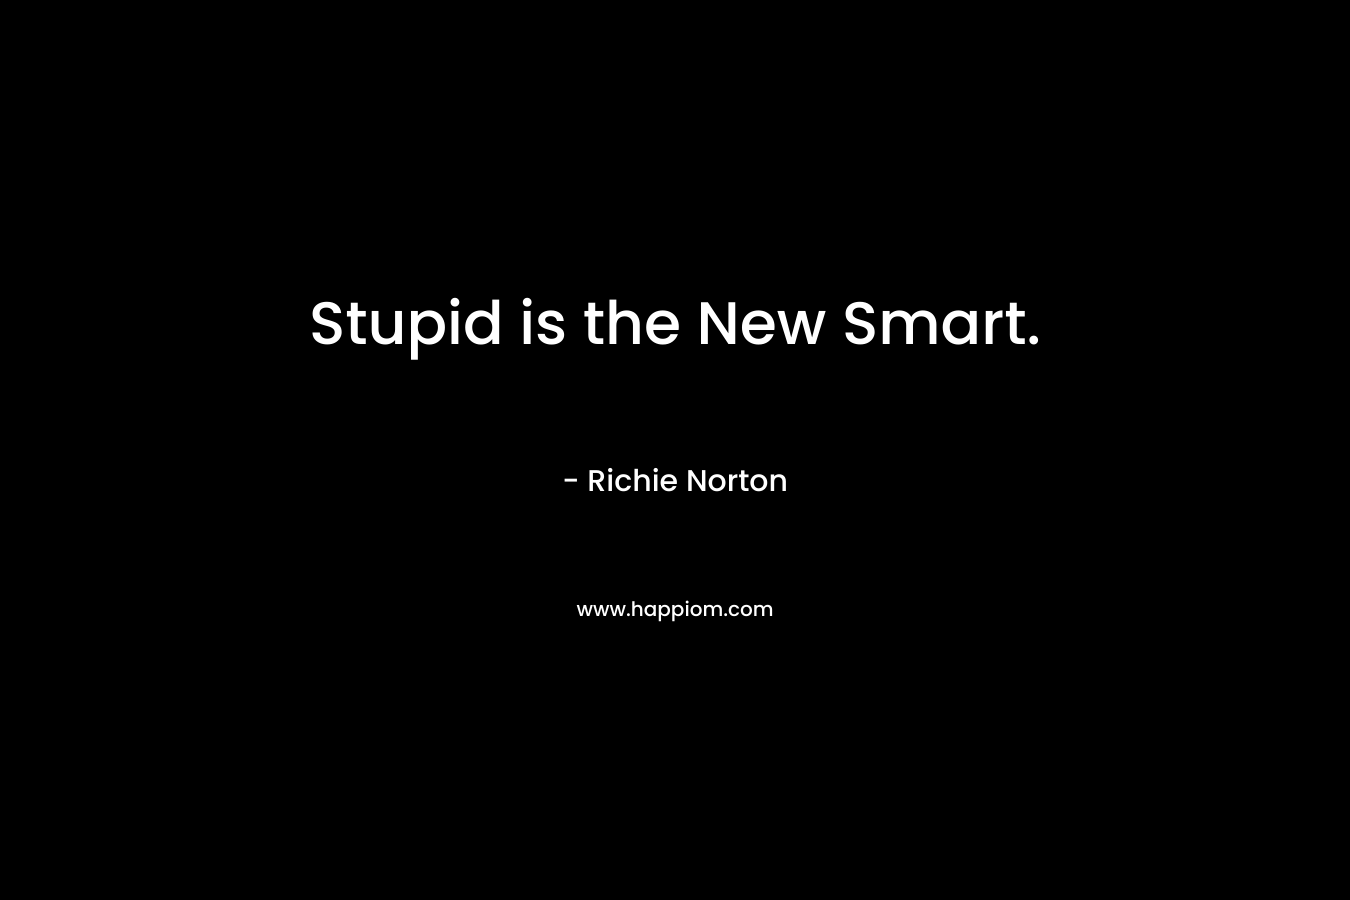 Stupid is the New Smart. – Richie Norton